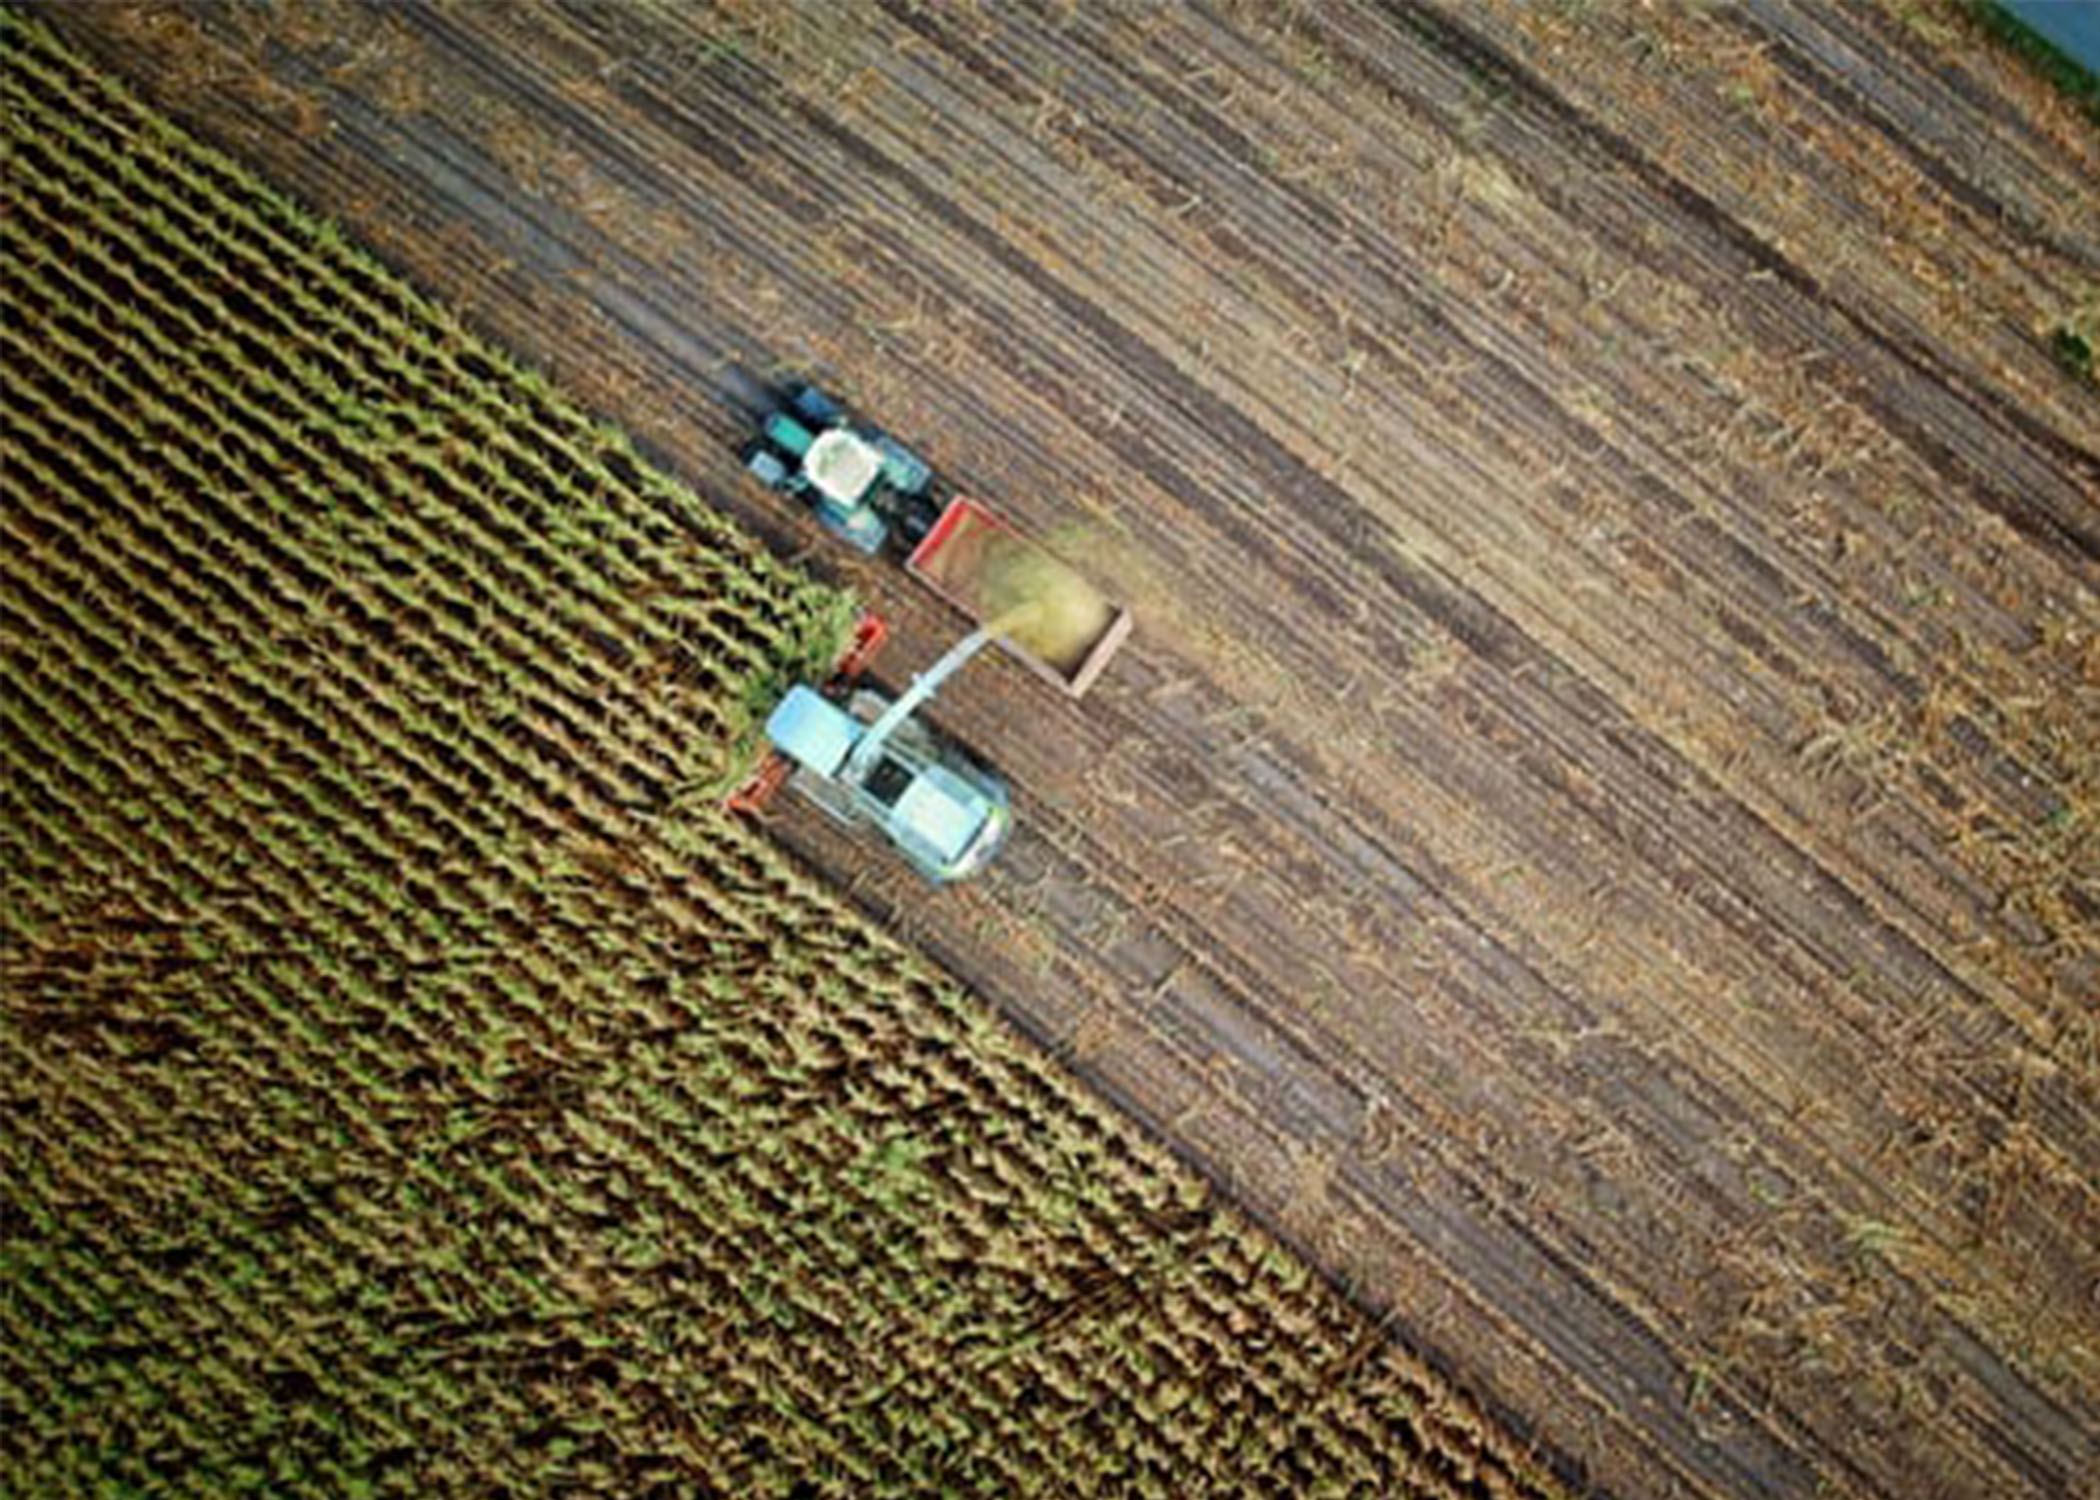 Ariel photo of two tractors on farmland.